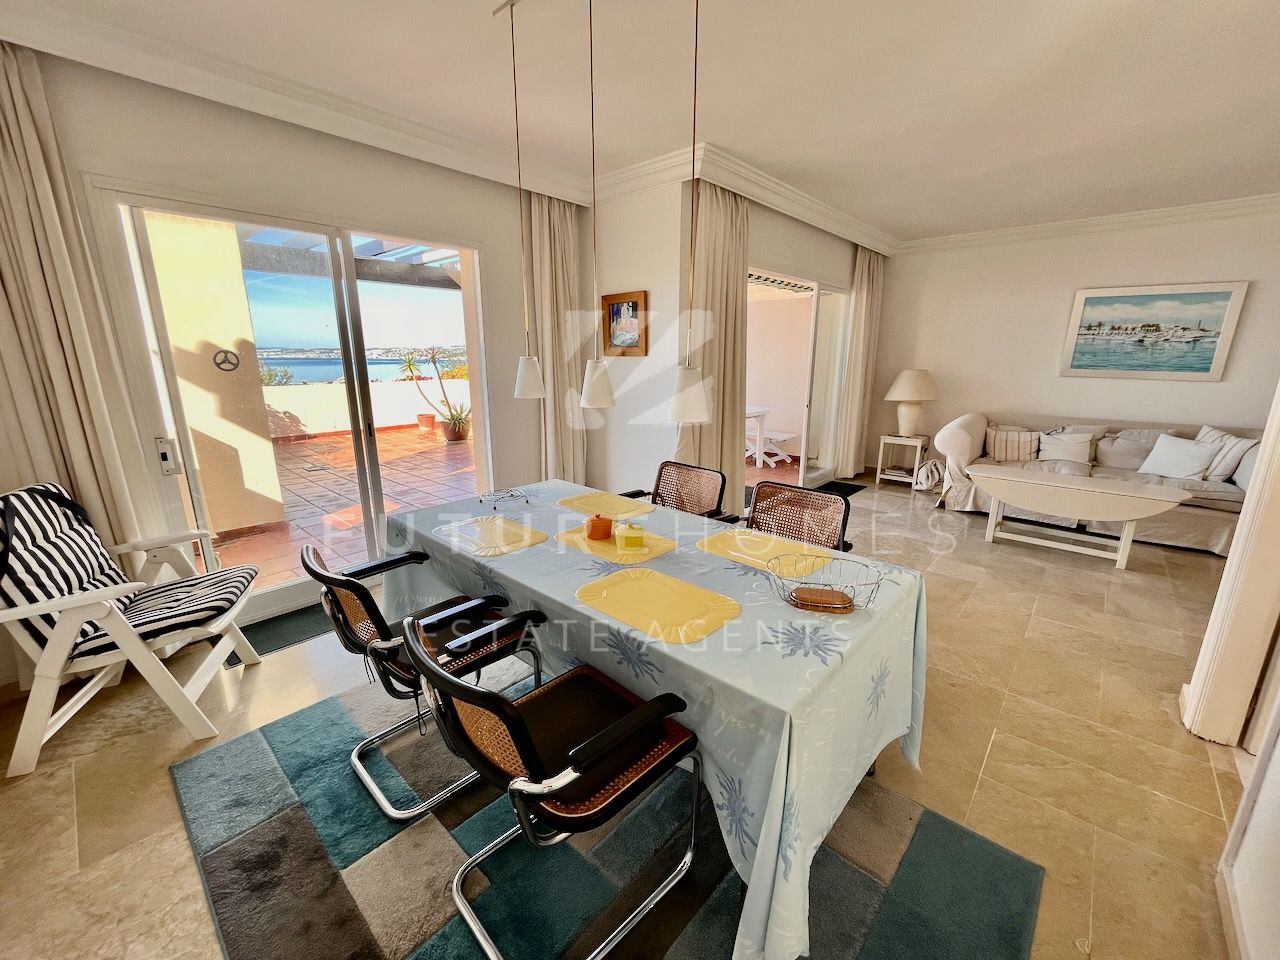 Spacious penthouse with frontline sea views next to Cristo Beach Estepona